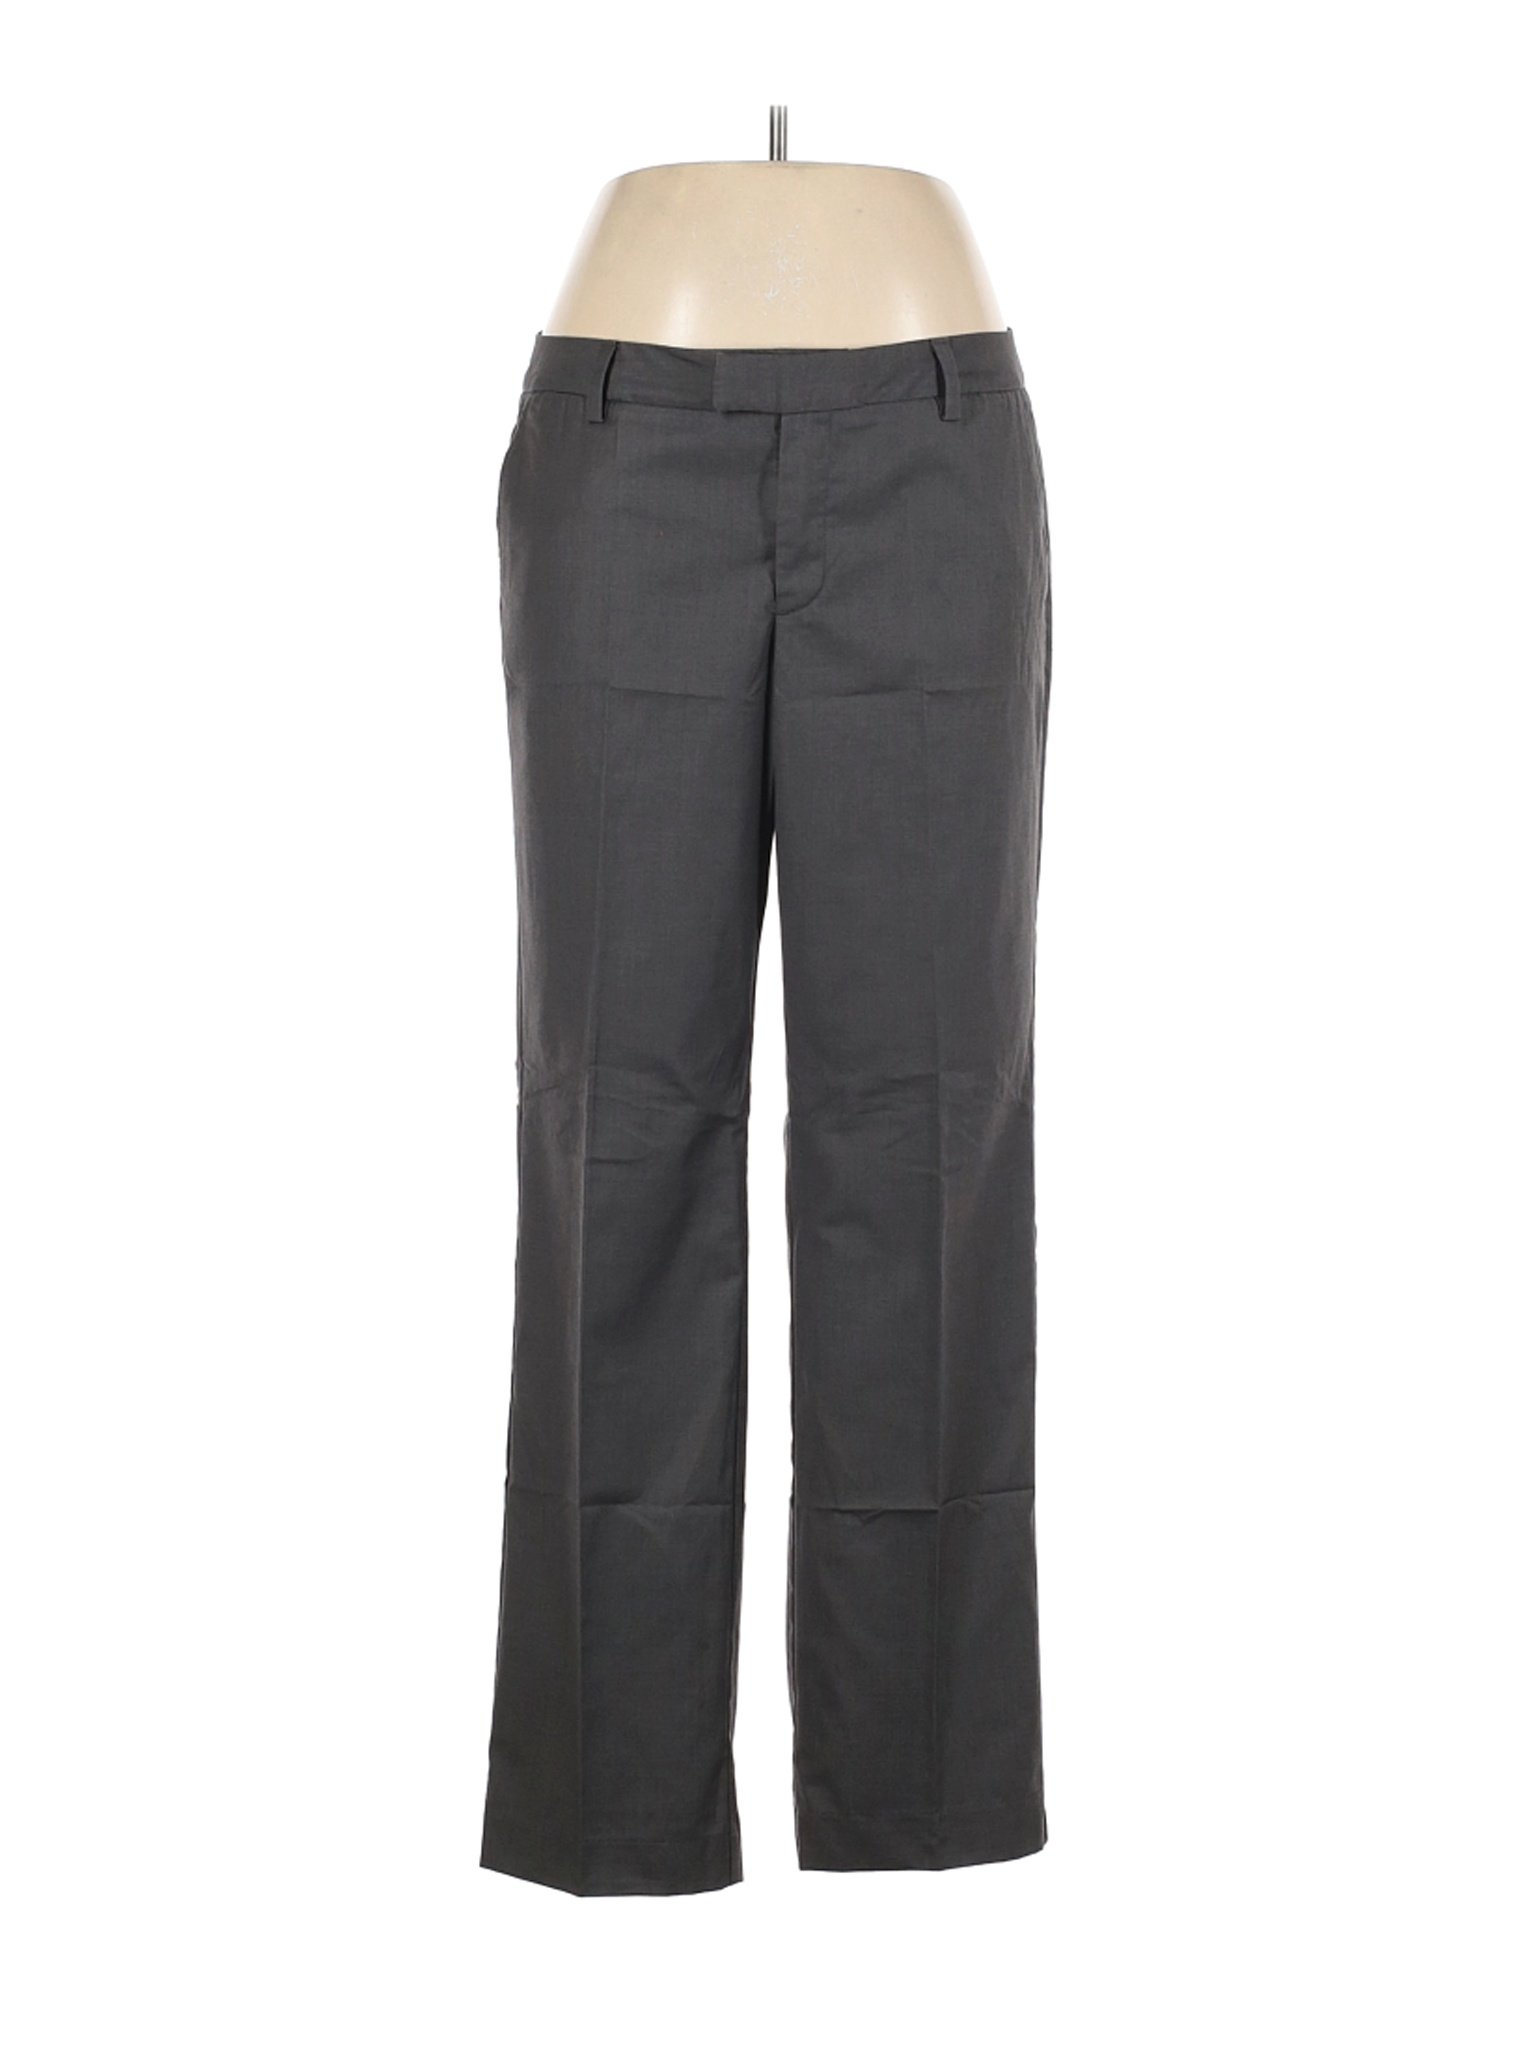 Lands' End Women Gray Dress Pants 12 | eBay